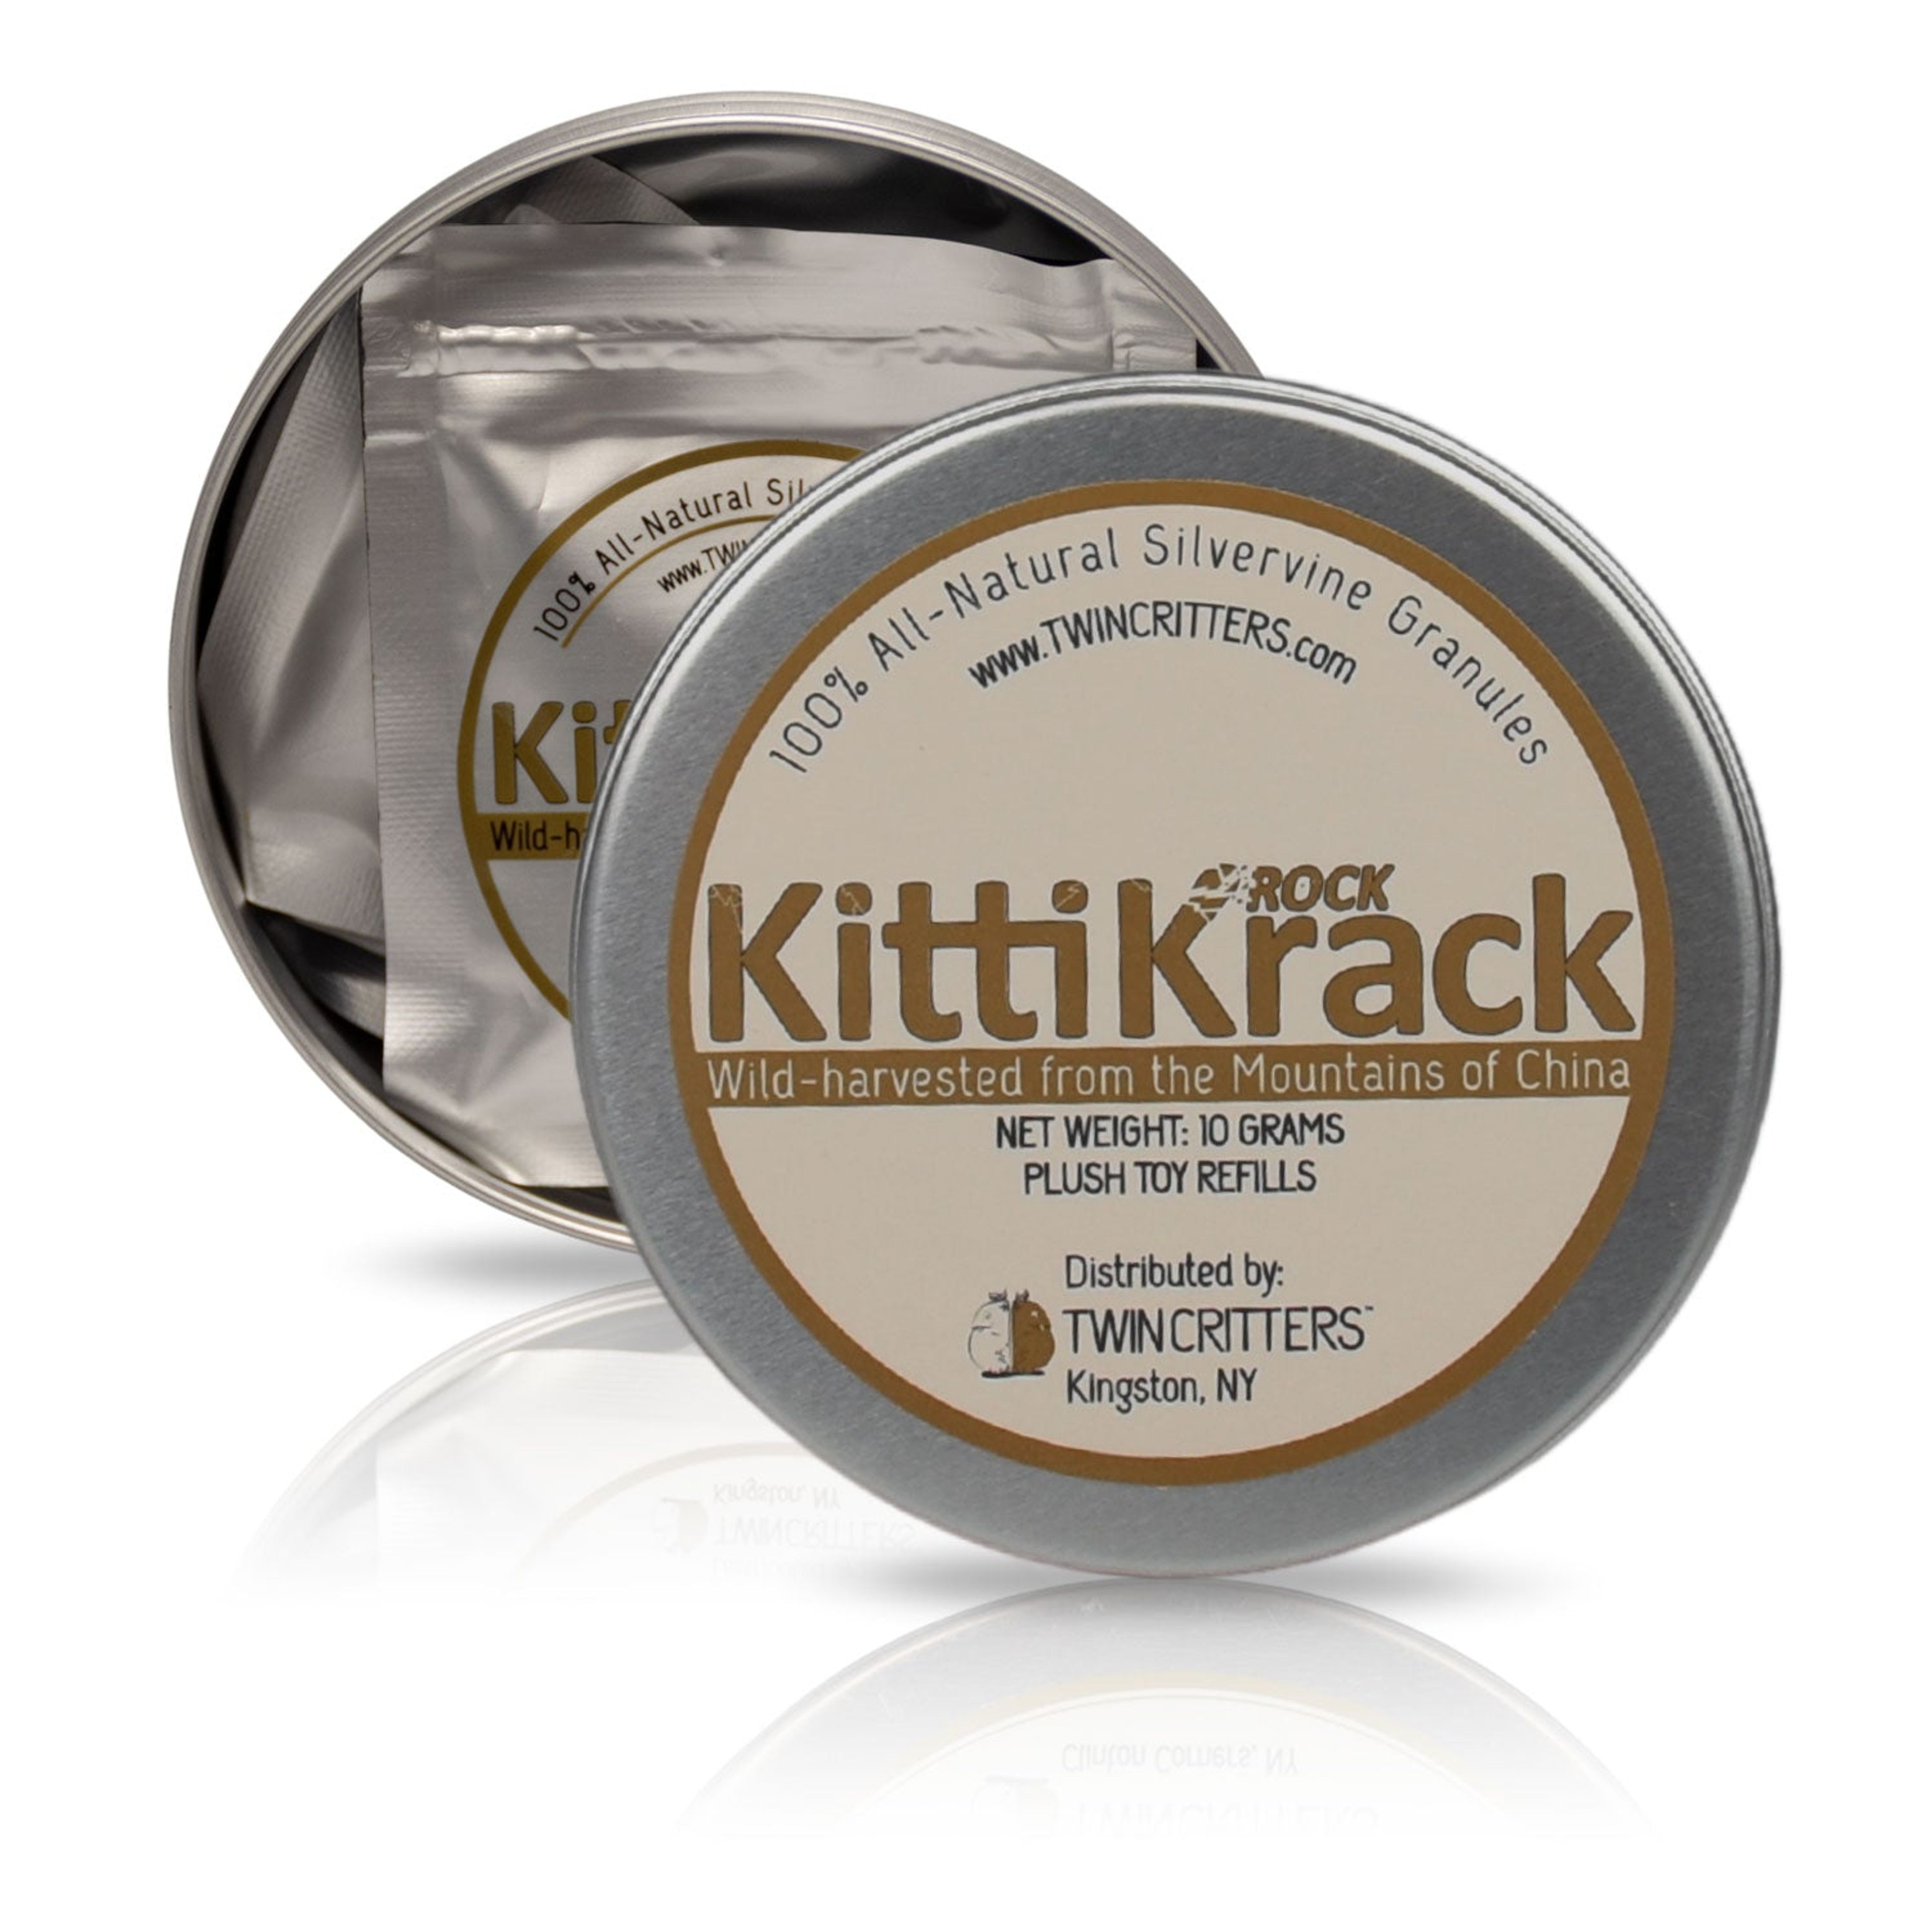 www.twincritters.com/products/kittikrack-rock-10-gram-organic-silvervine-crushed-fruit-refil